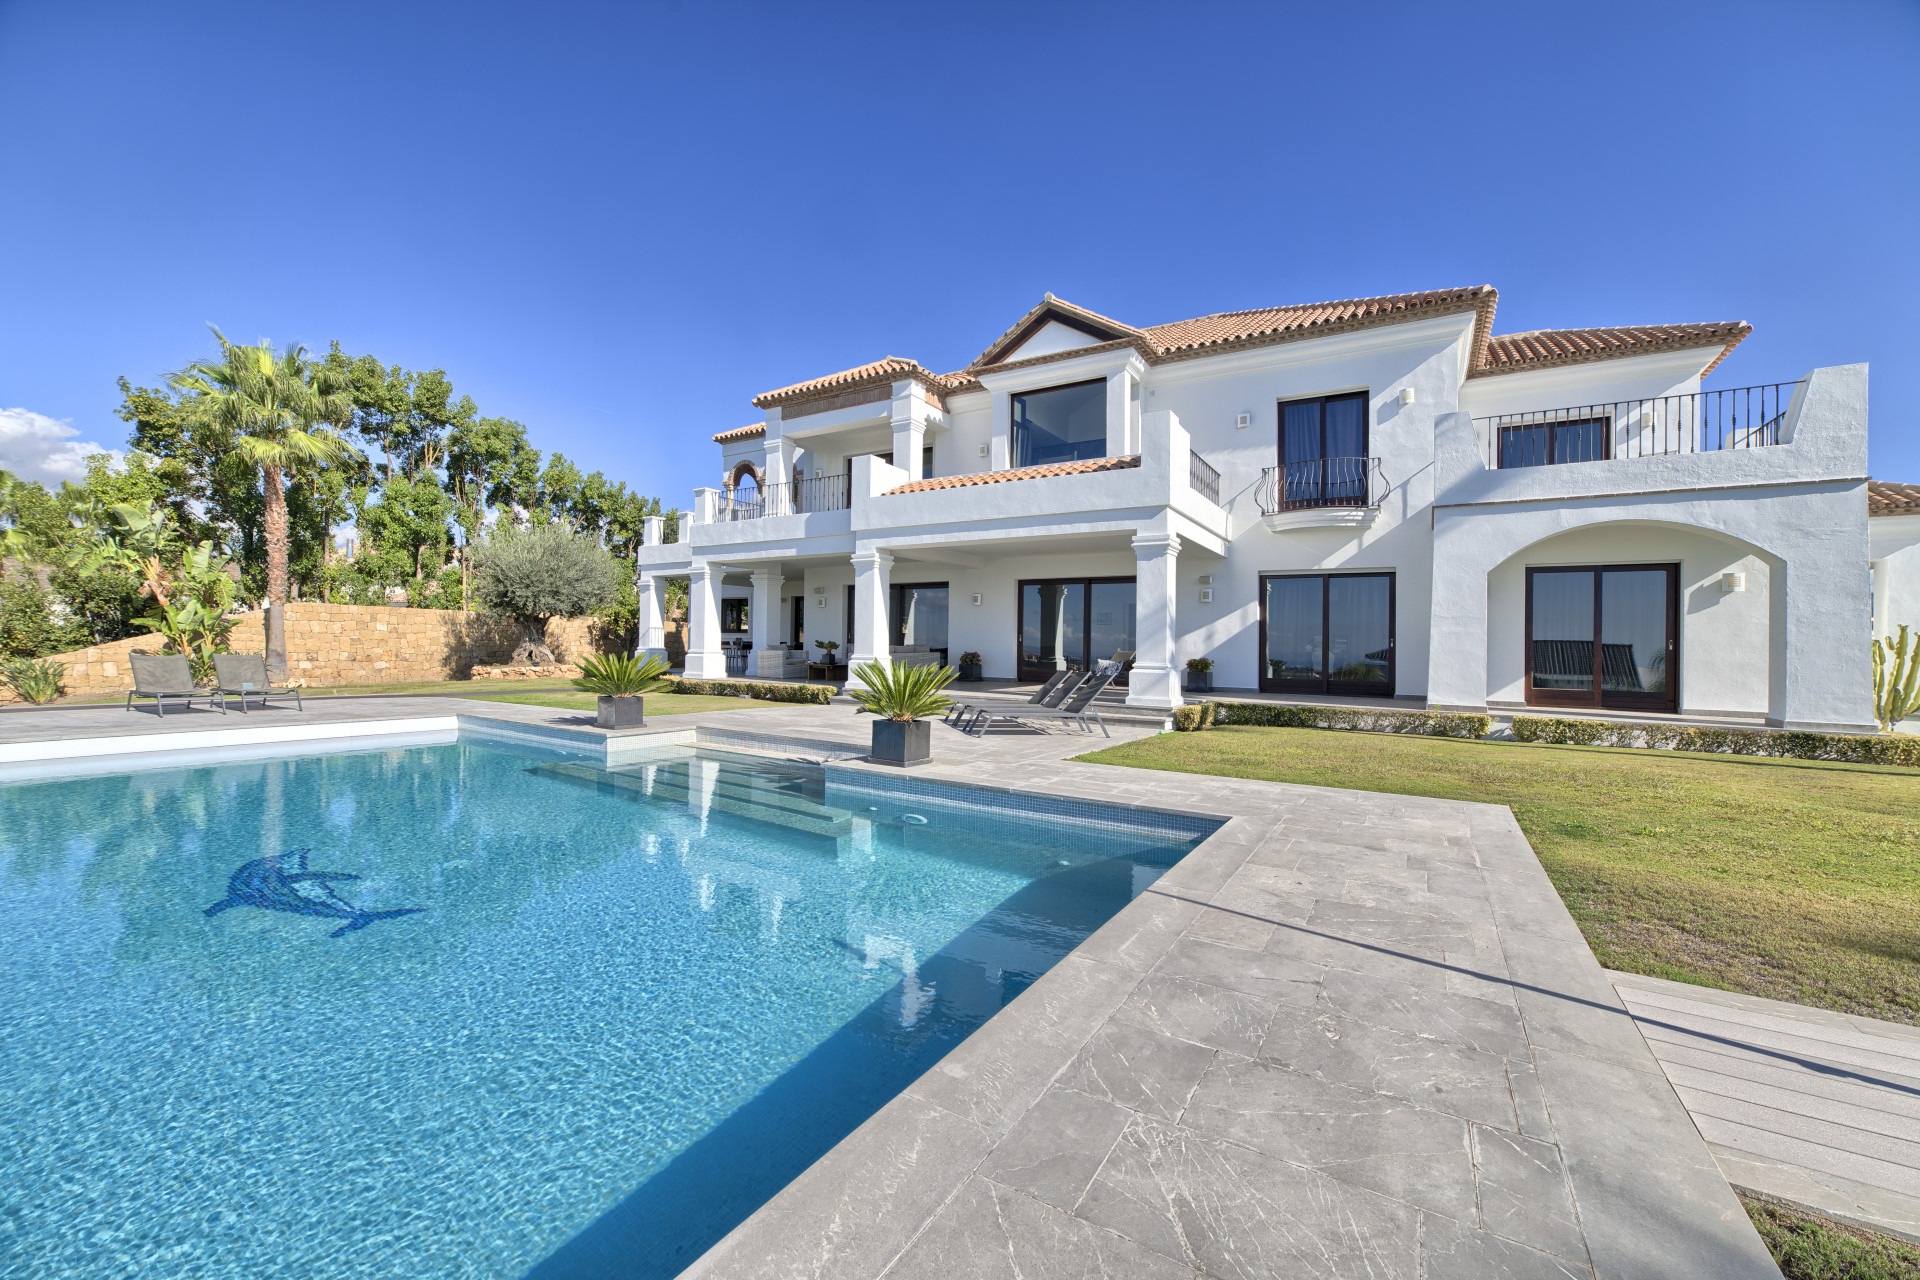 ARFV1160-365 - Fantastic modern villa for sale in Los Flamingos Golf in Benahavis with panoramic views